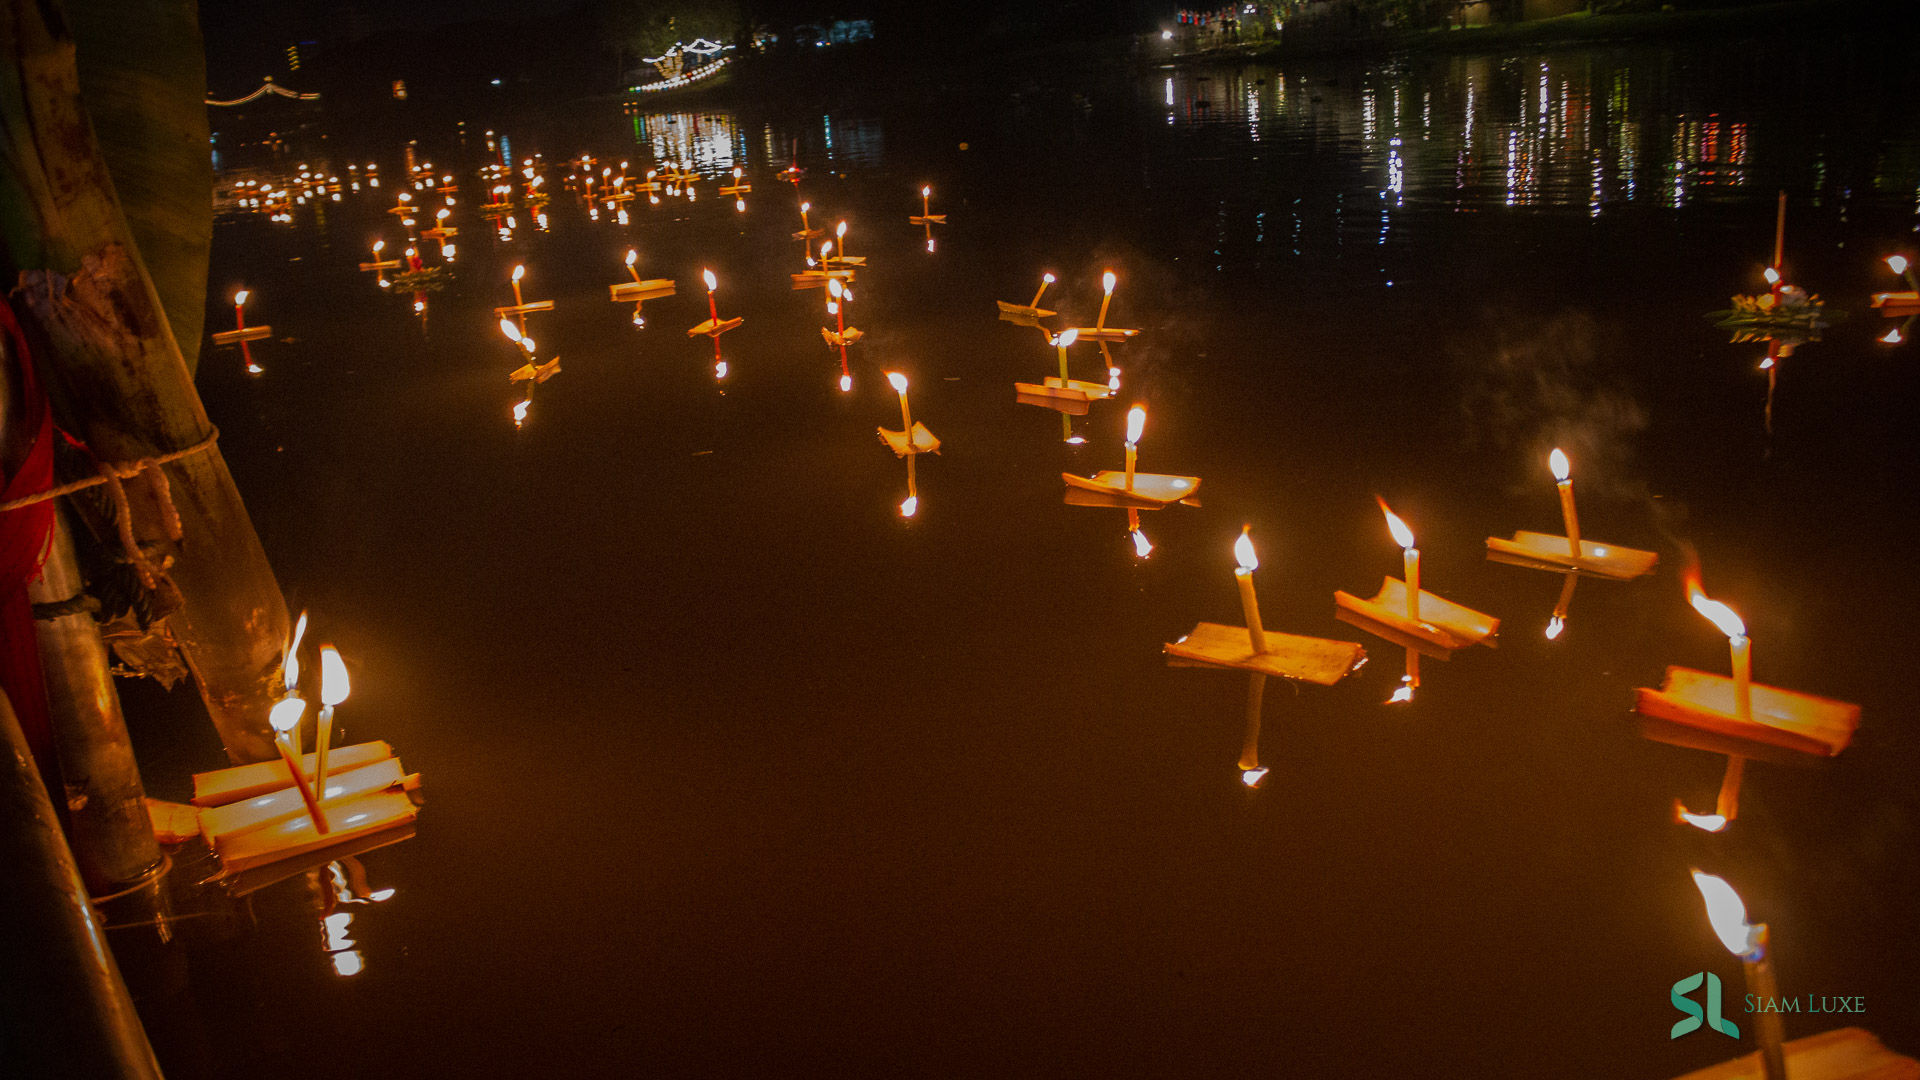 Hundreds of mini Krathong sais float on the river during the Loy Krathong festival in Thailand